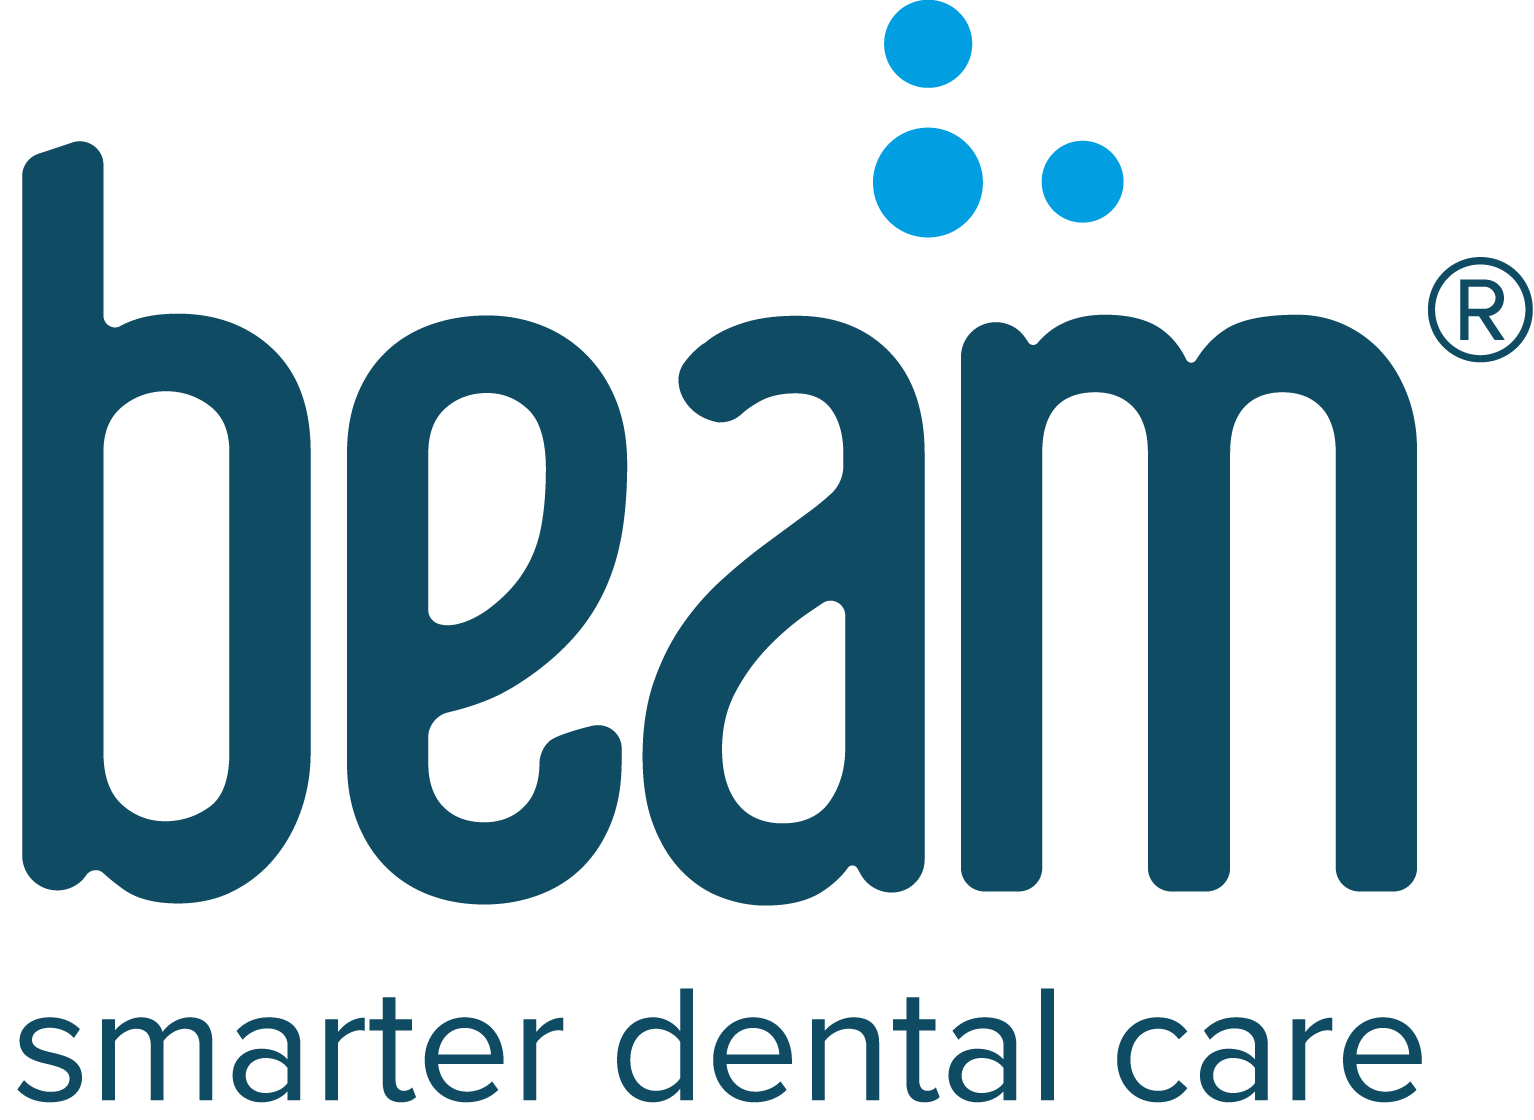 Beam Dental